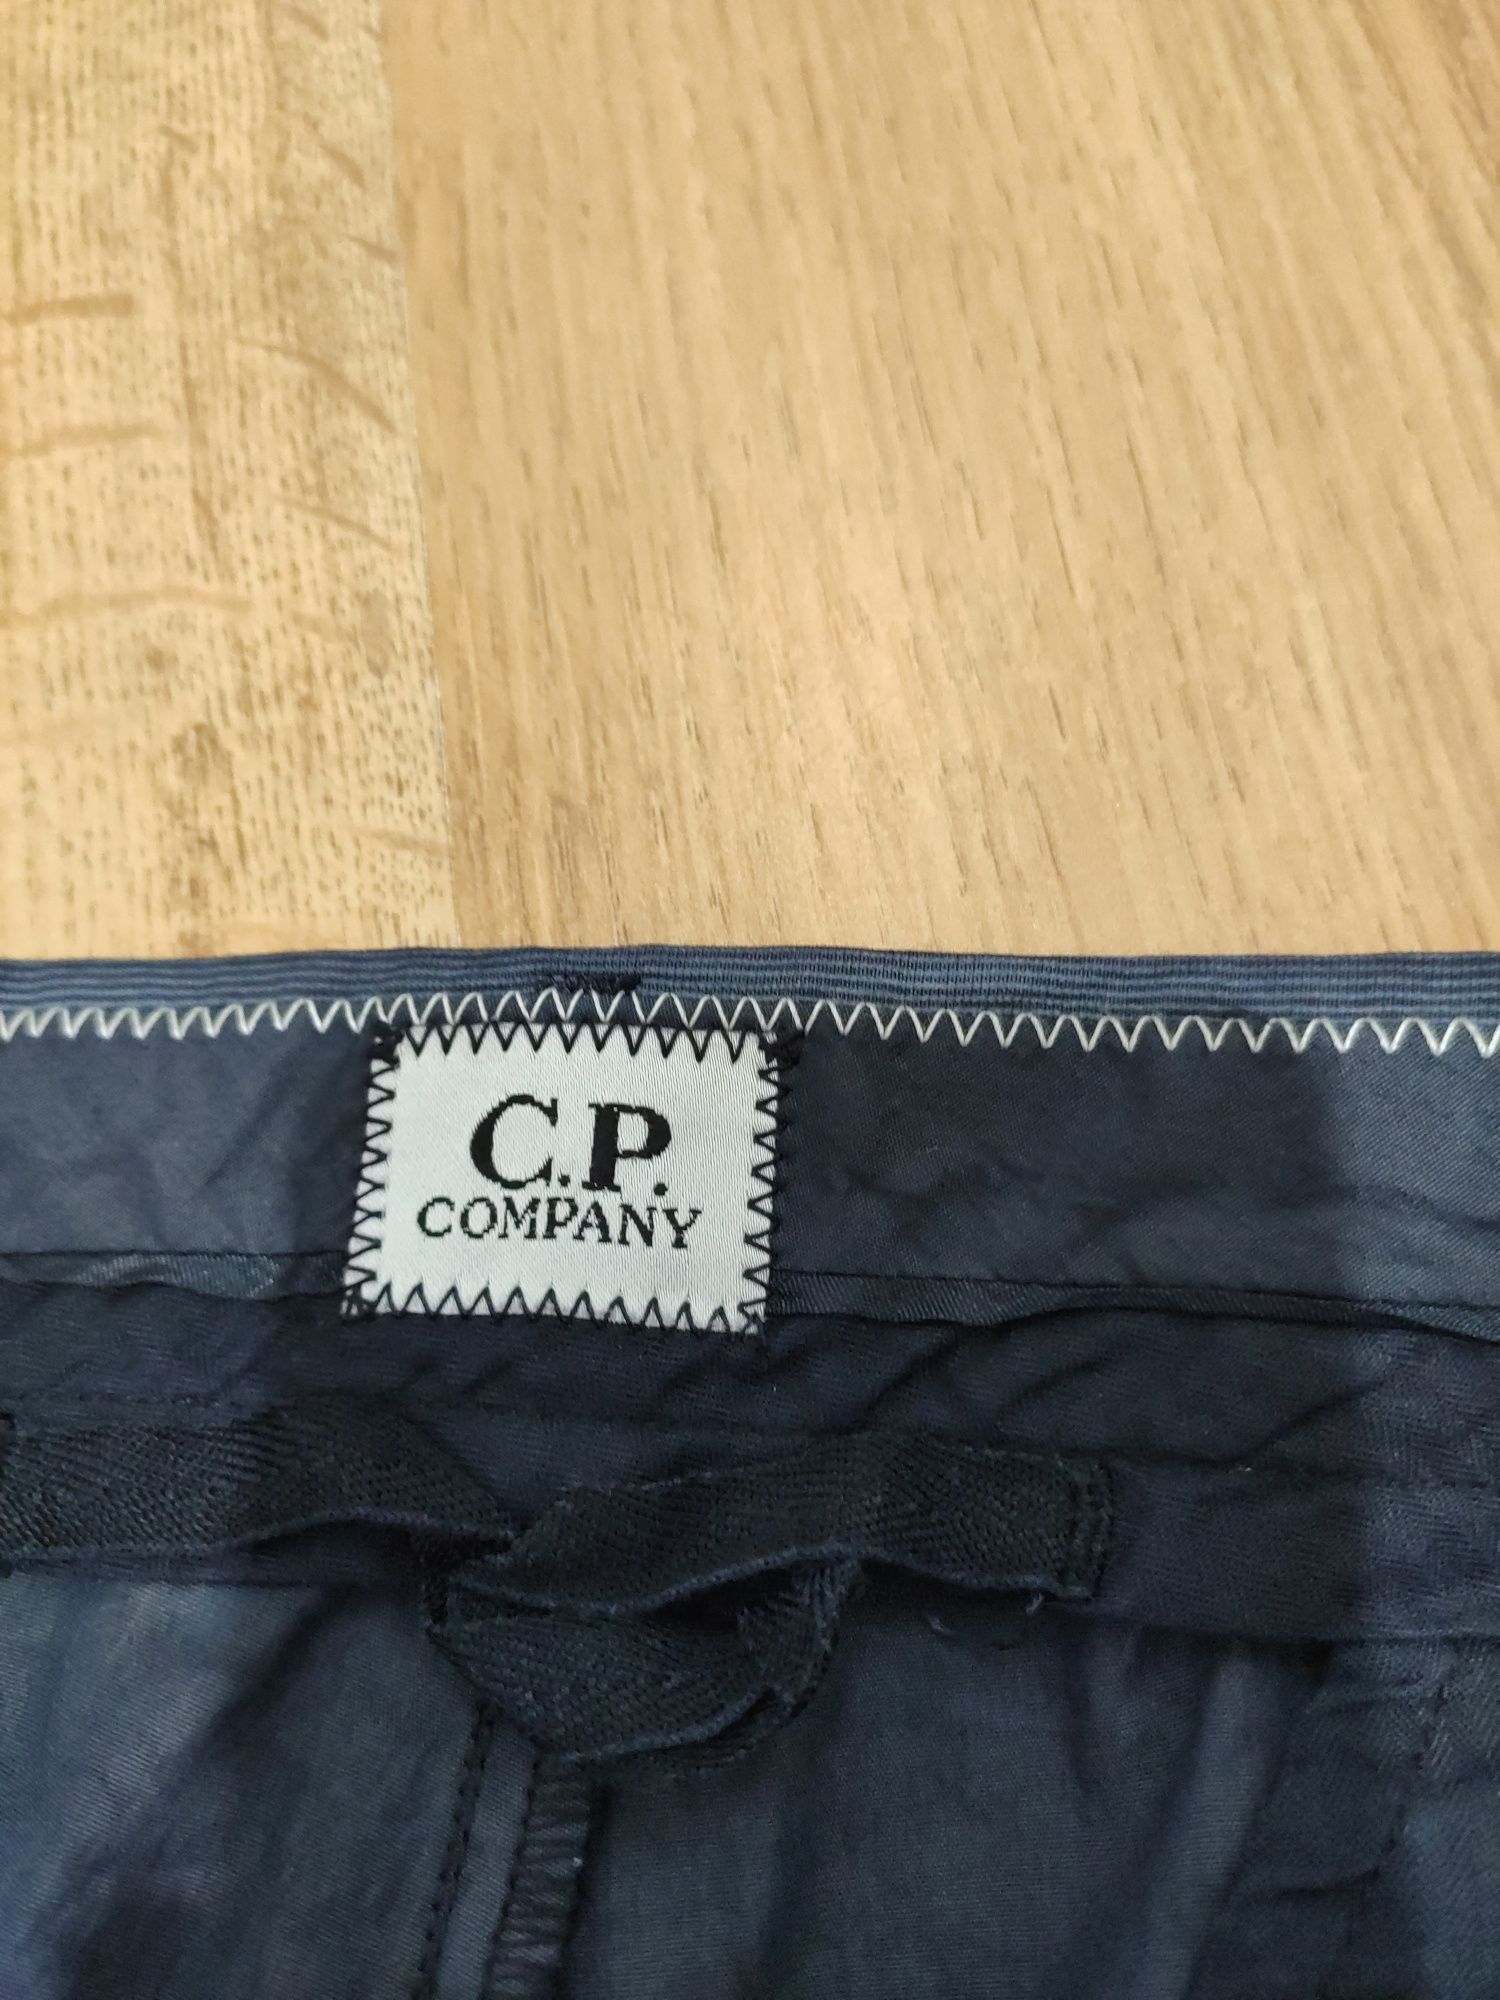 Pantaloni CP Company mărimea 52